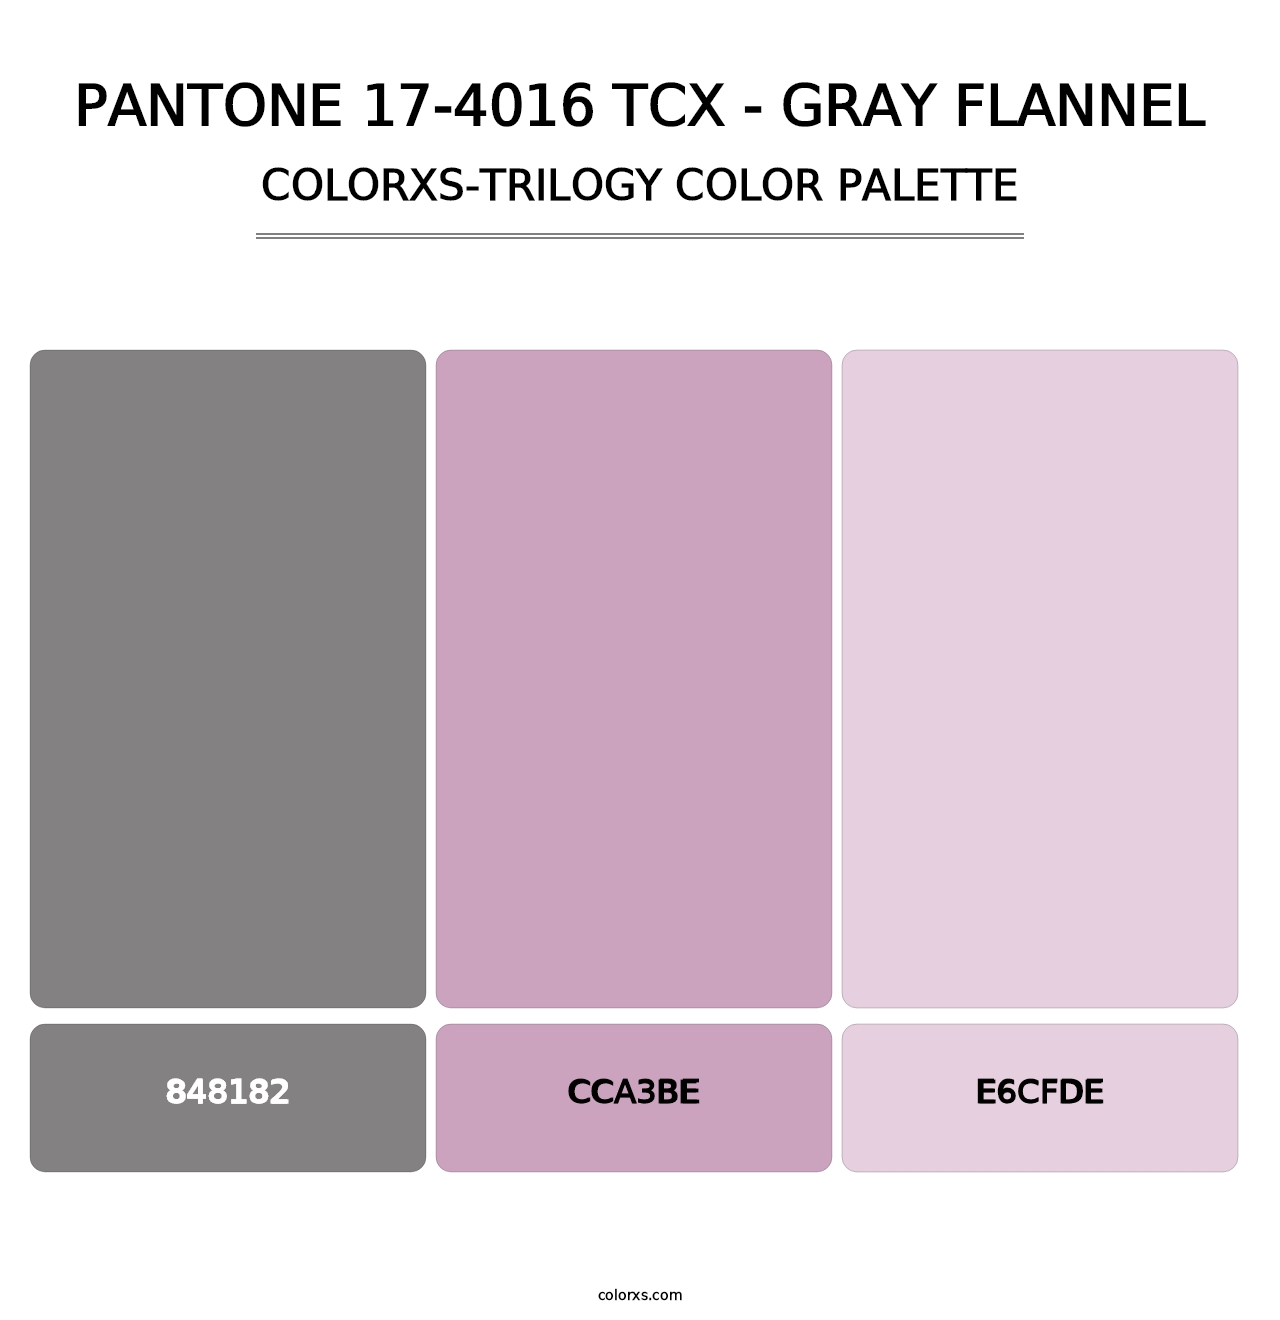 PANTONE 17-4016 TCX - Gray Flannel - Colorxs Trilogy Palette